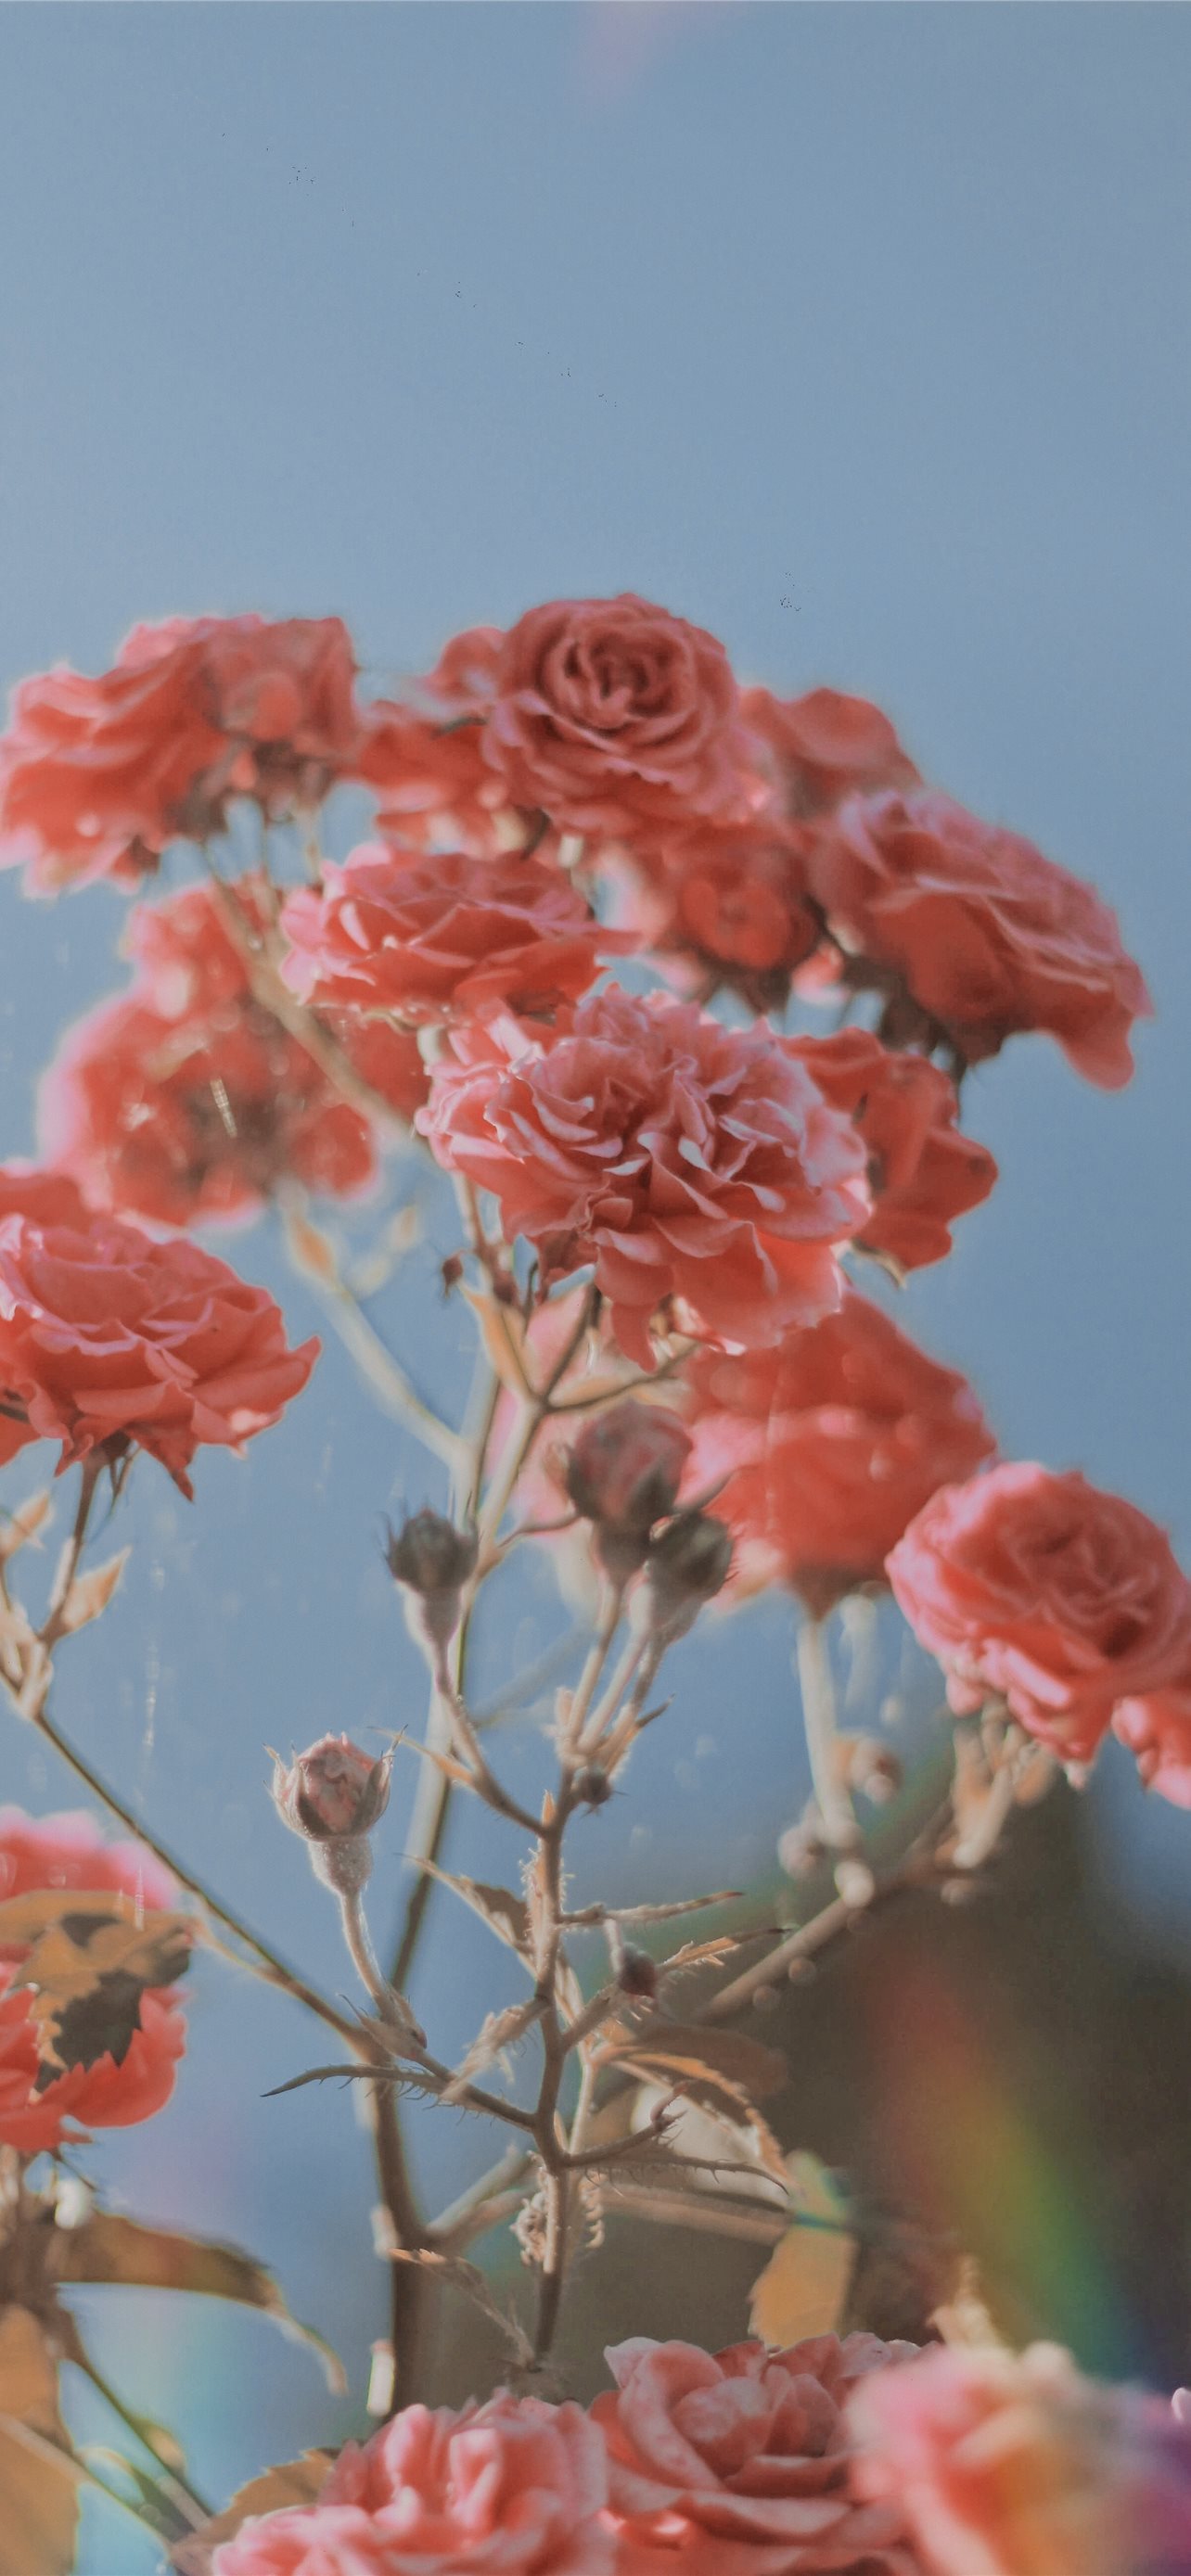 pink rose flower iPhone Wallpaper Free Download